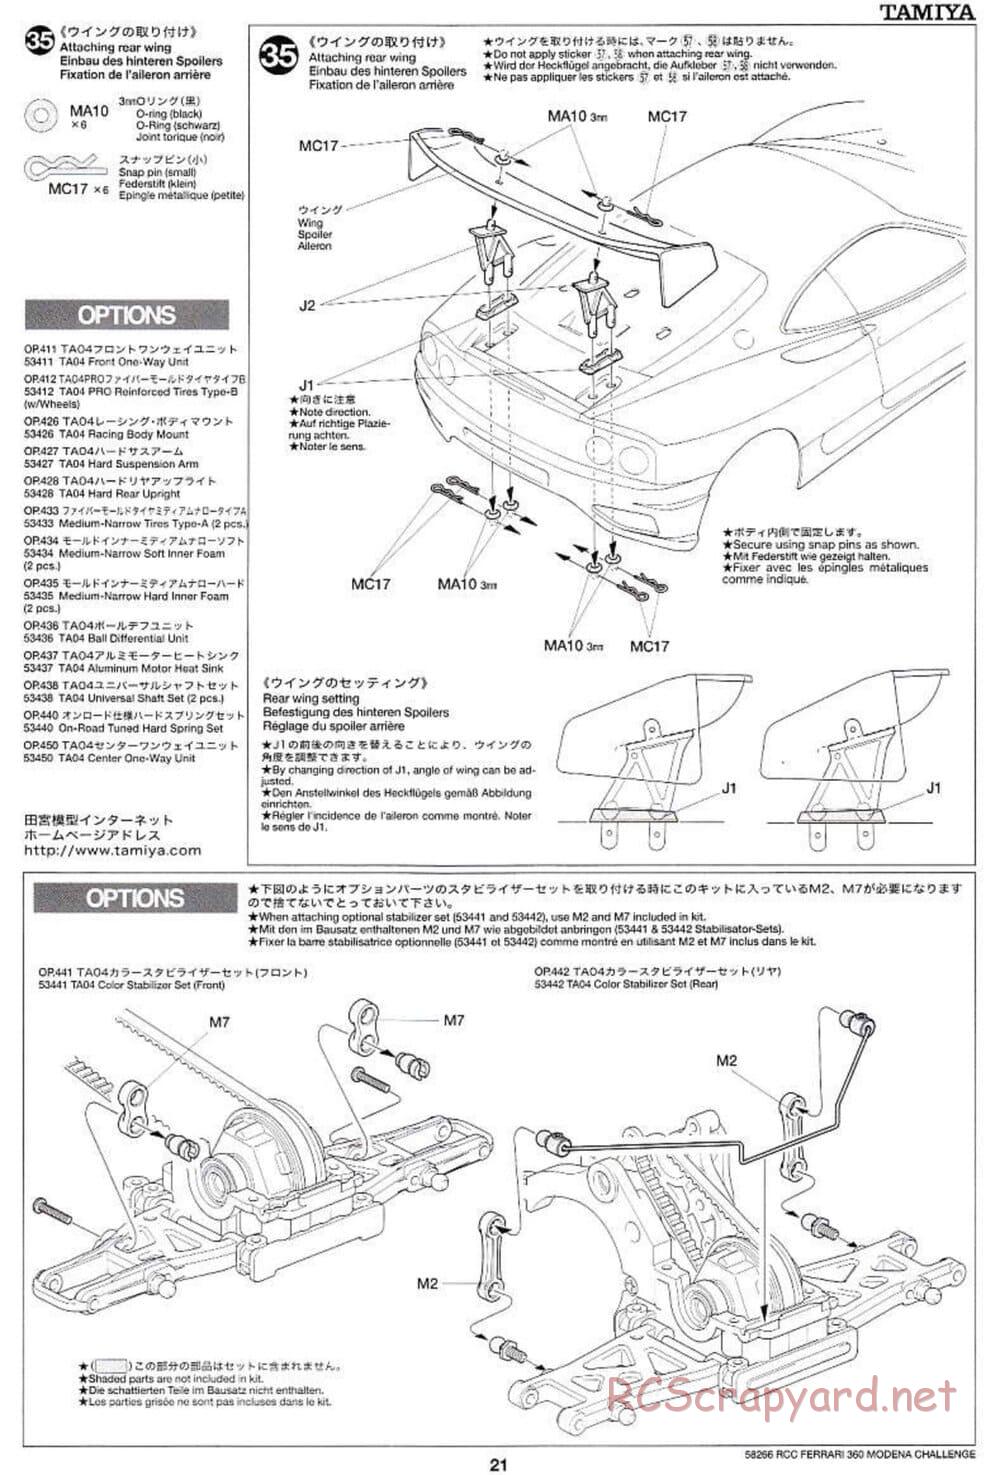 Tamiya - Ferrari 360 Modena Challenge - TA-04 Chassis - Manual - Page 21